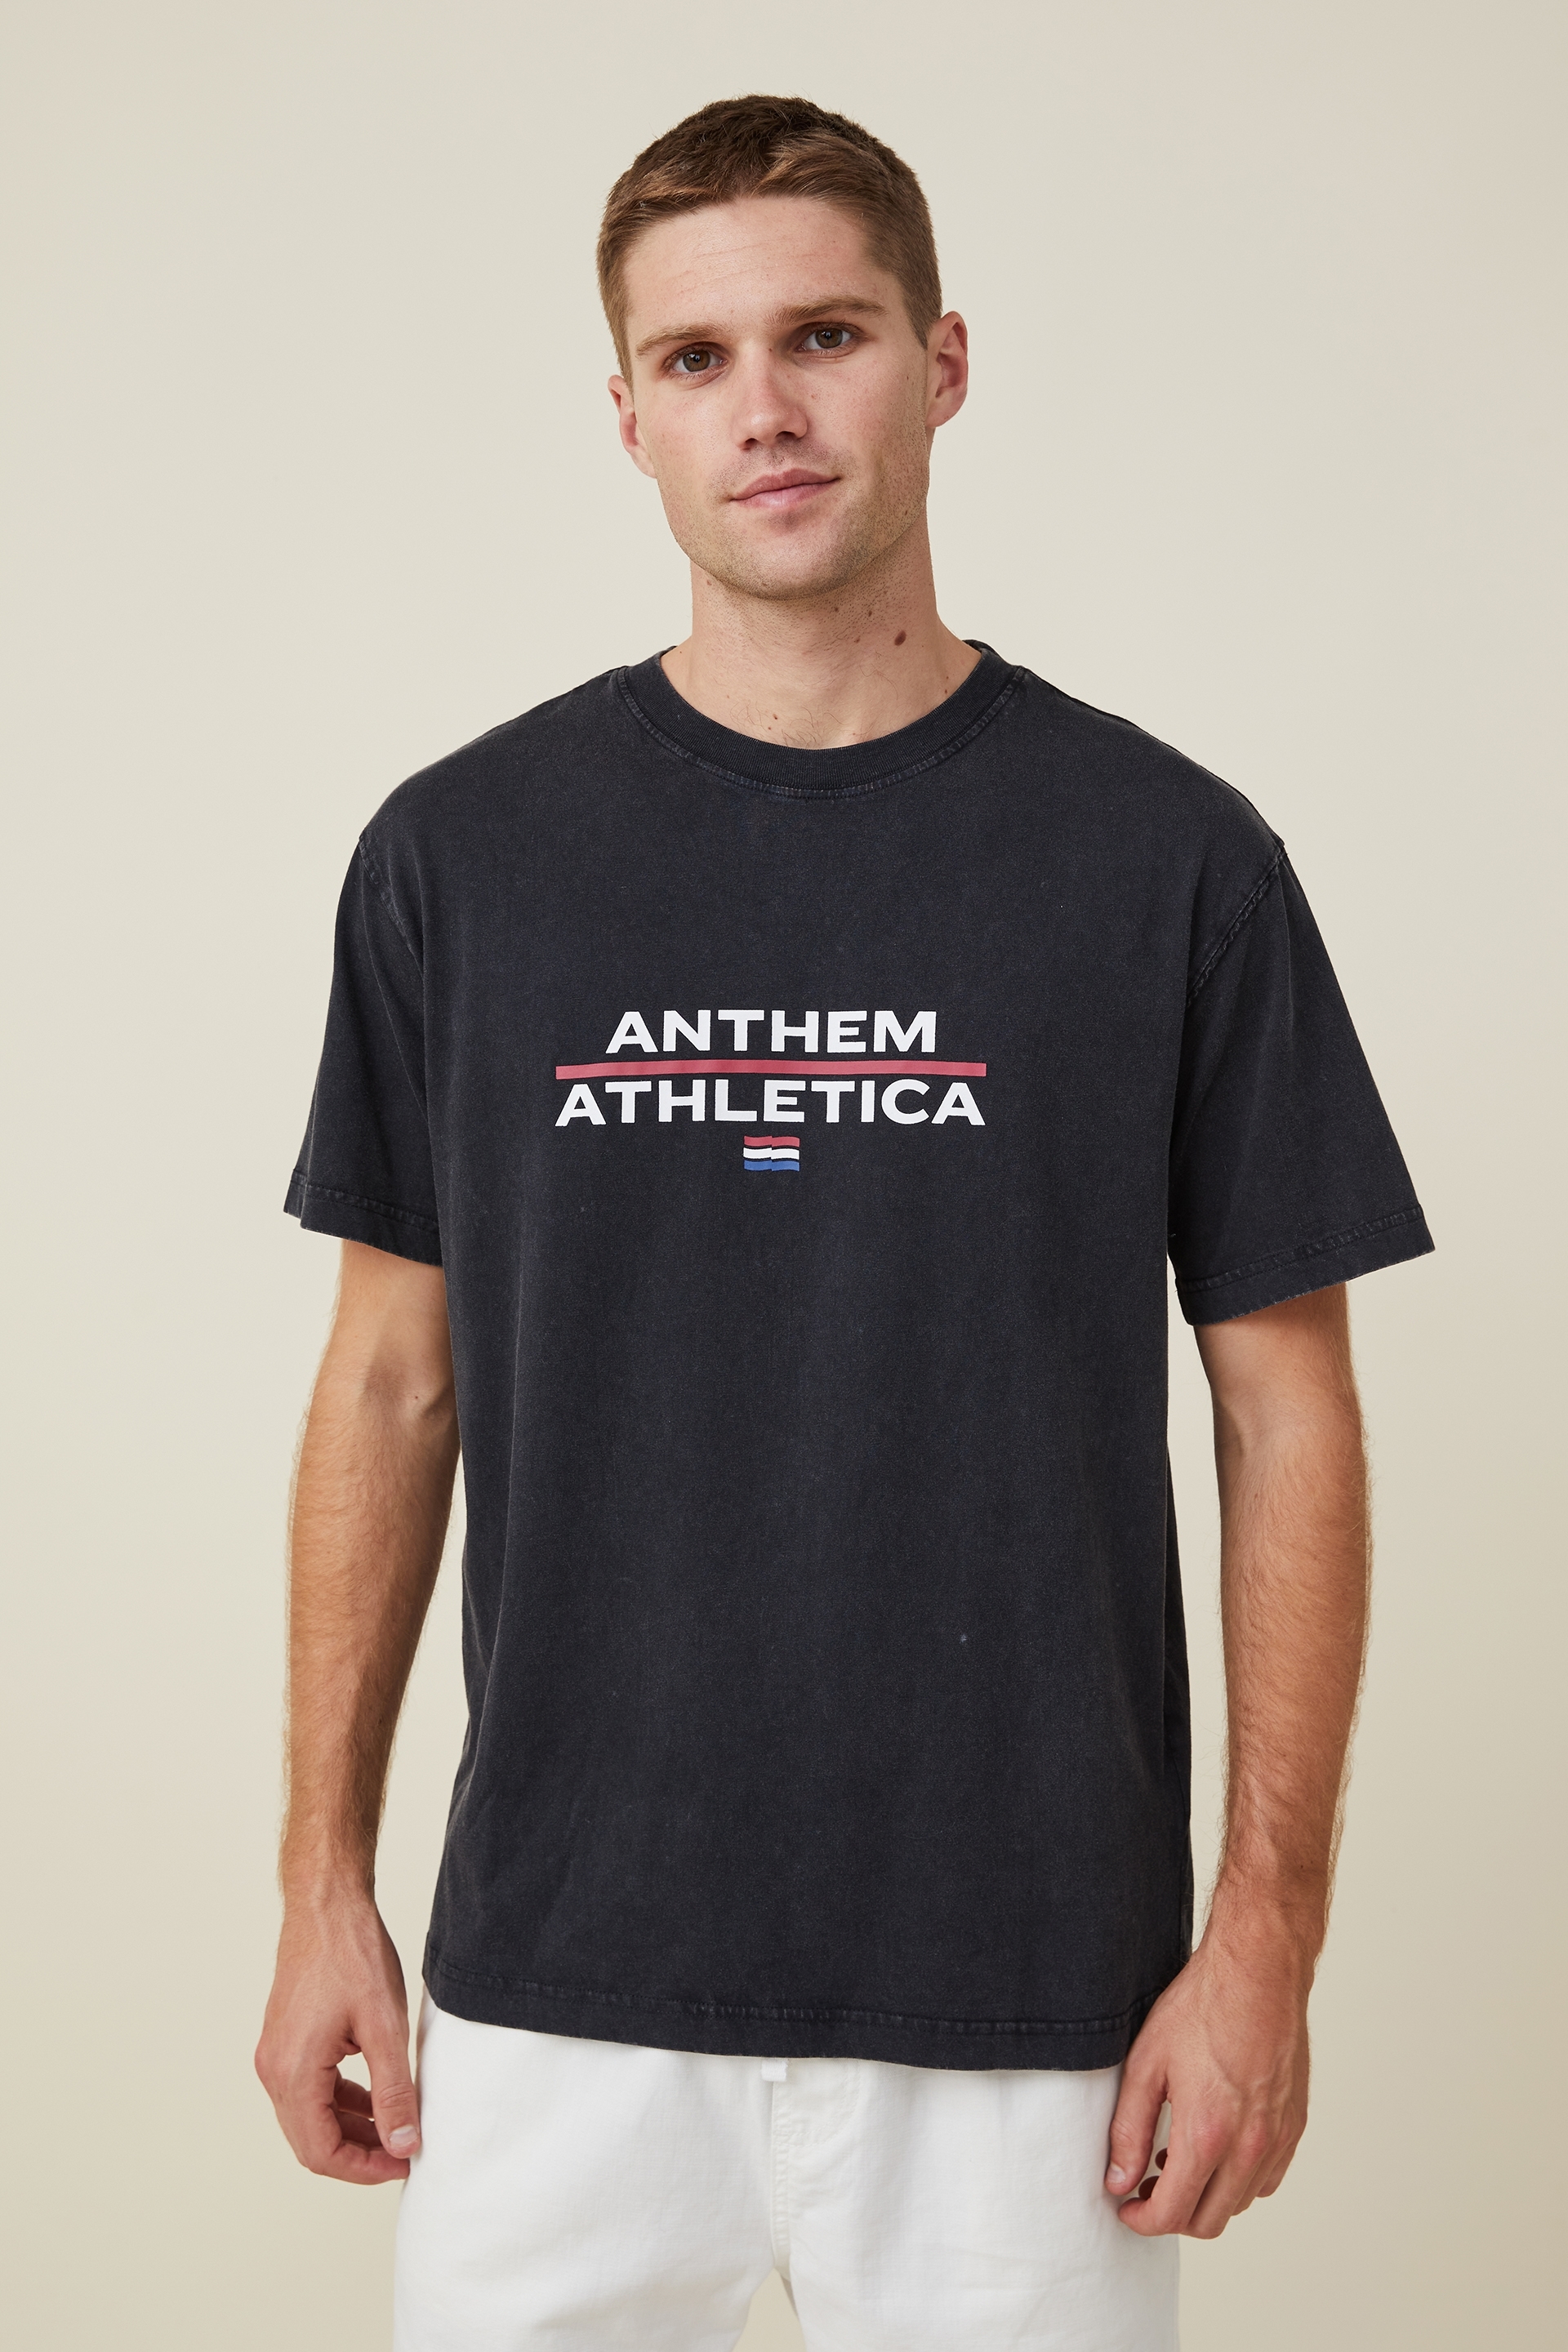 Cotton On Men - Premium Loose Fit Classic T-Shirt - Black/anthem athletica